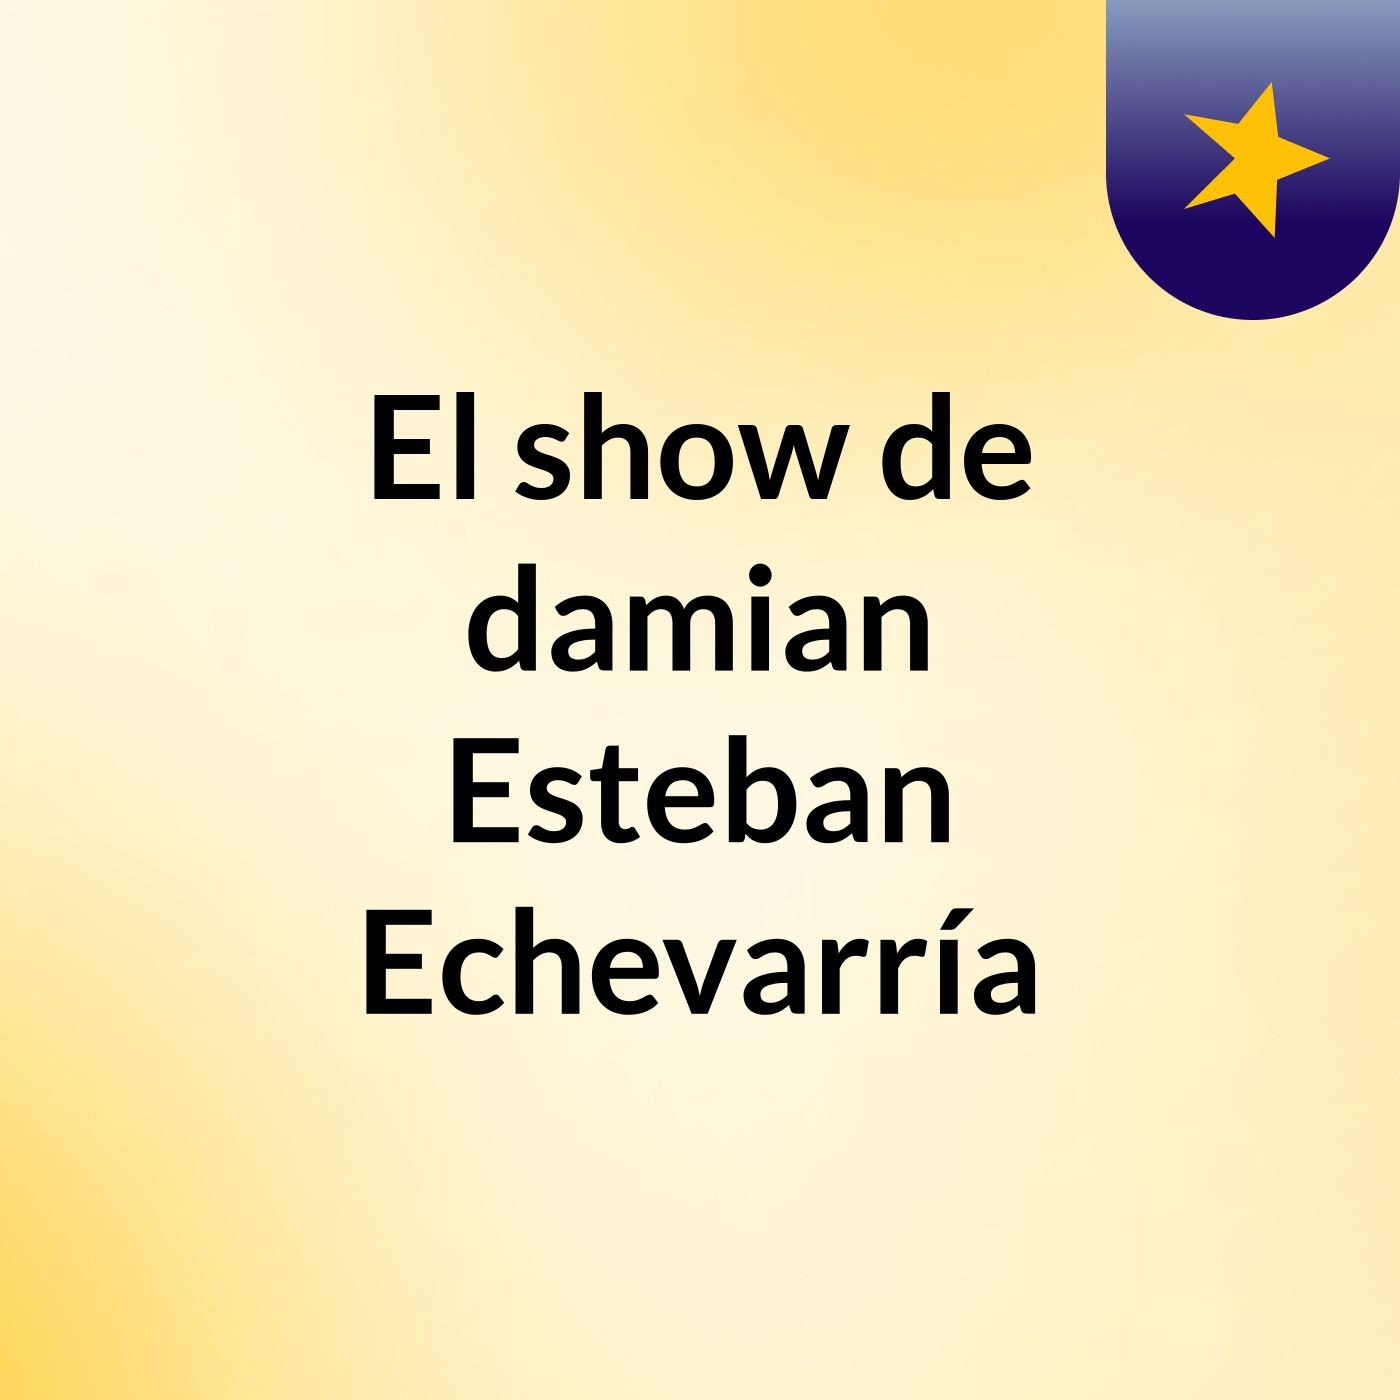 Episodio 6 - El show de damian Esteban Echevarría